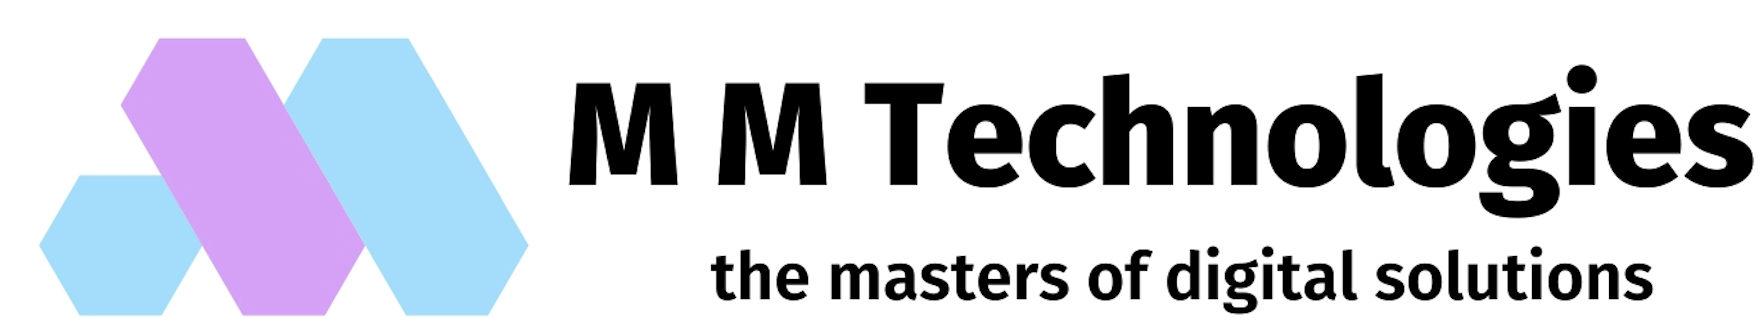 M M TECHNOLOGIES Logo